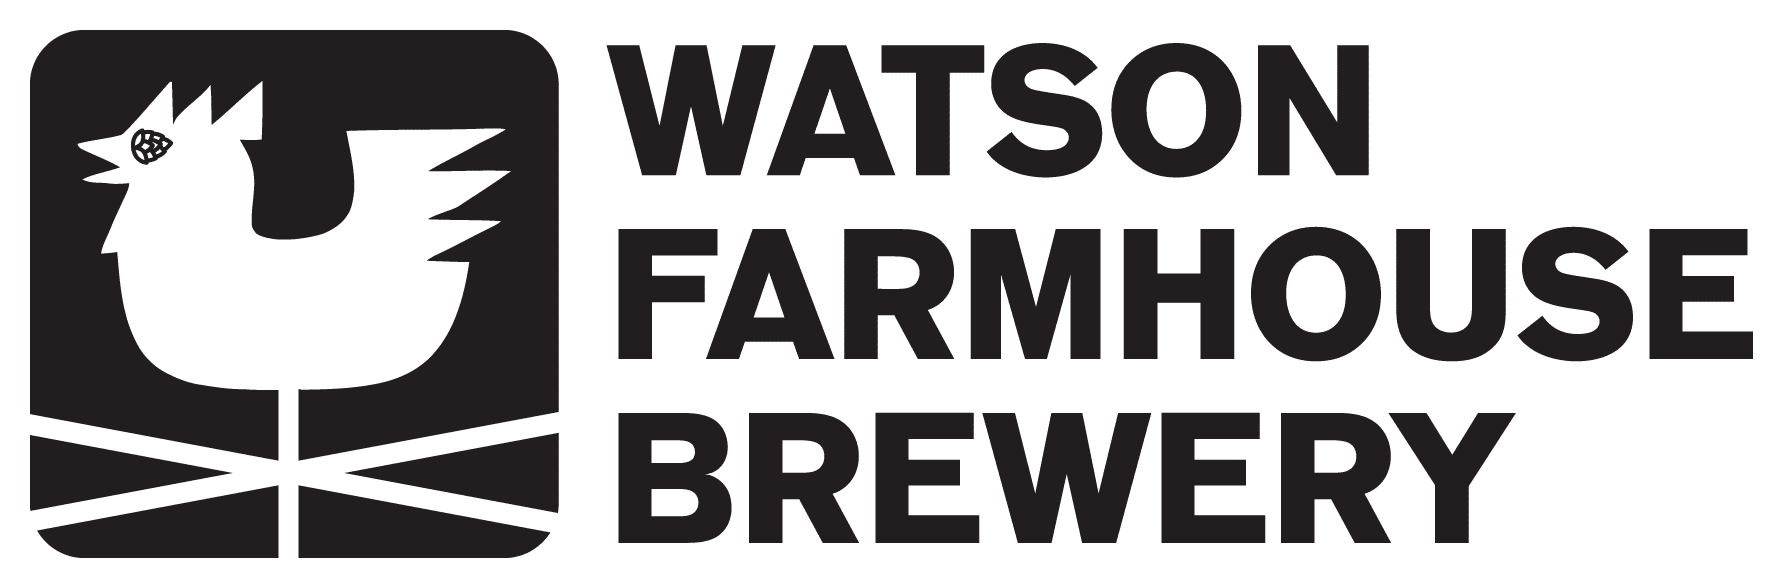 Watson Farmhouse Brewery